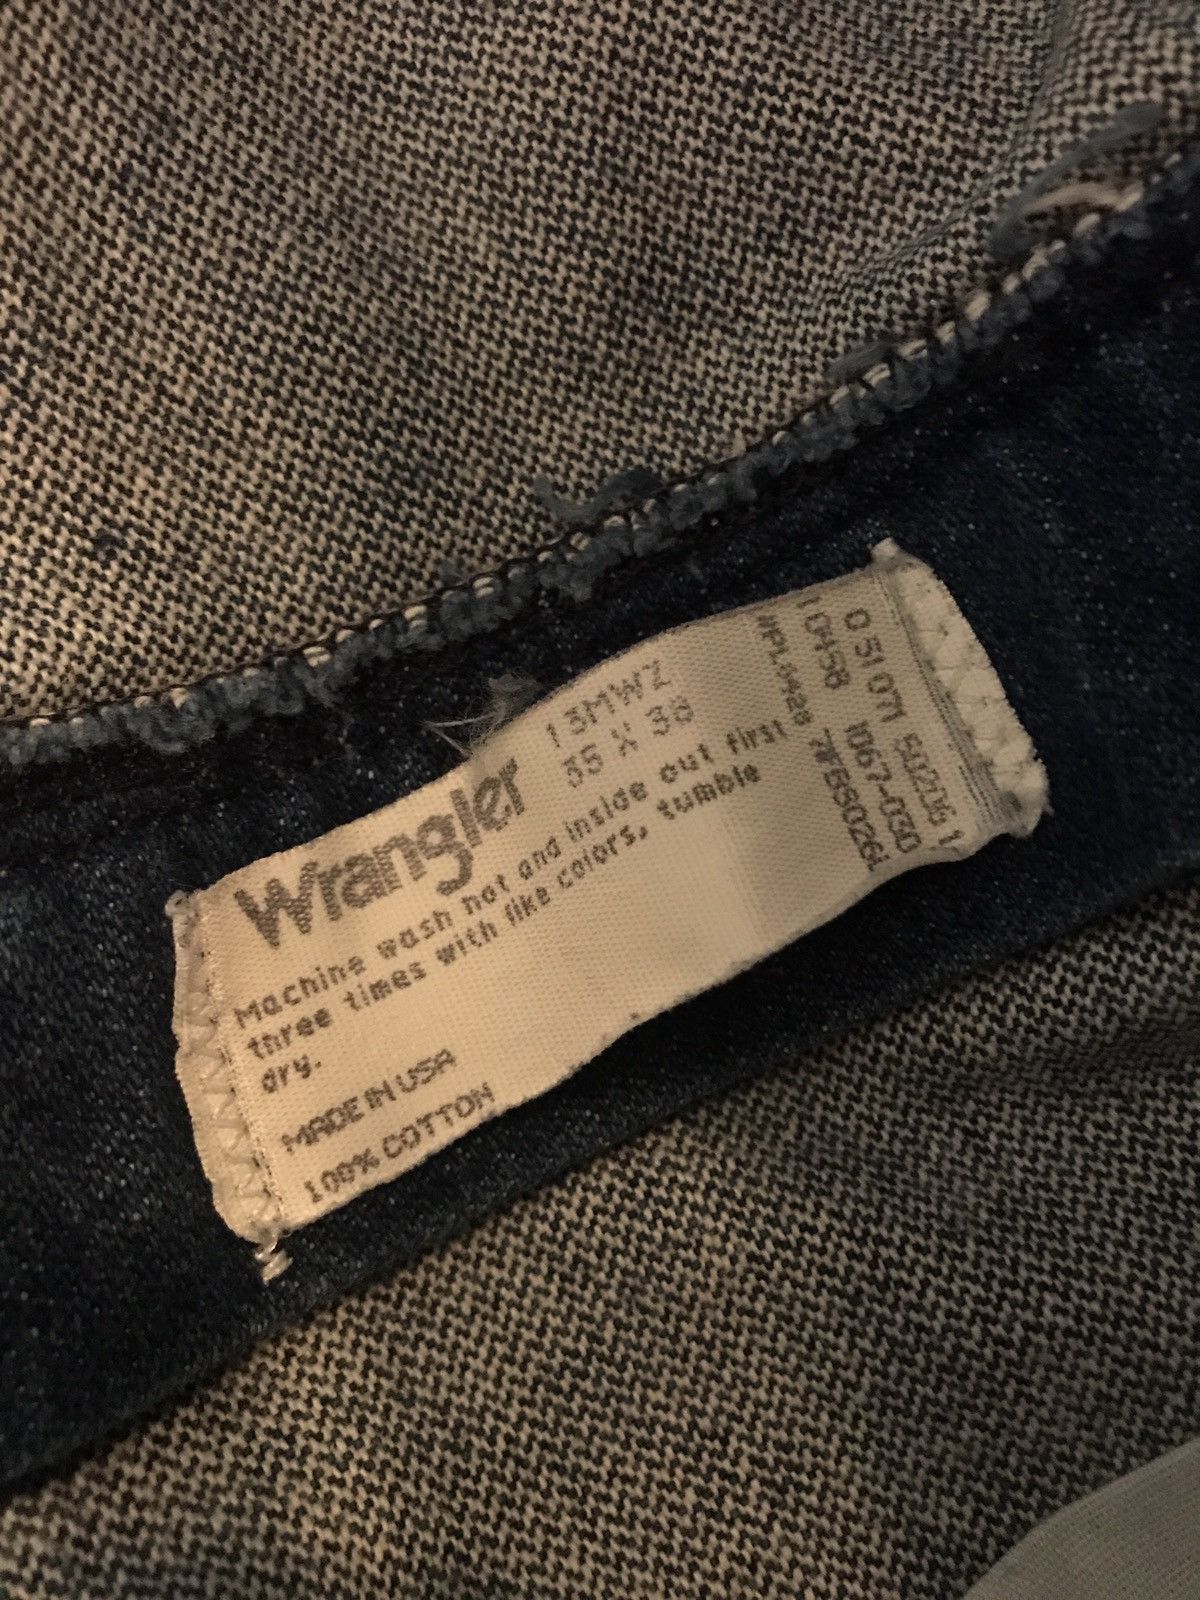 Vintage Vintage Made in USA Wrangler Work Jeans Size US 35 - 5 Thumbnail